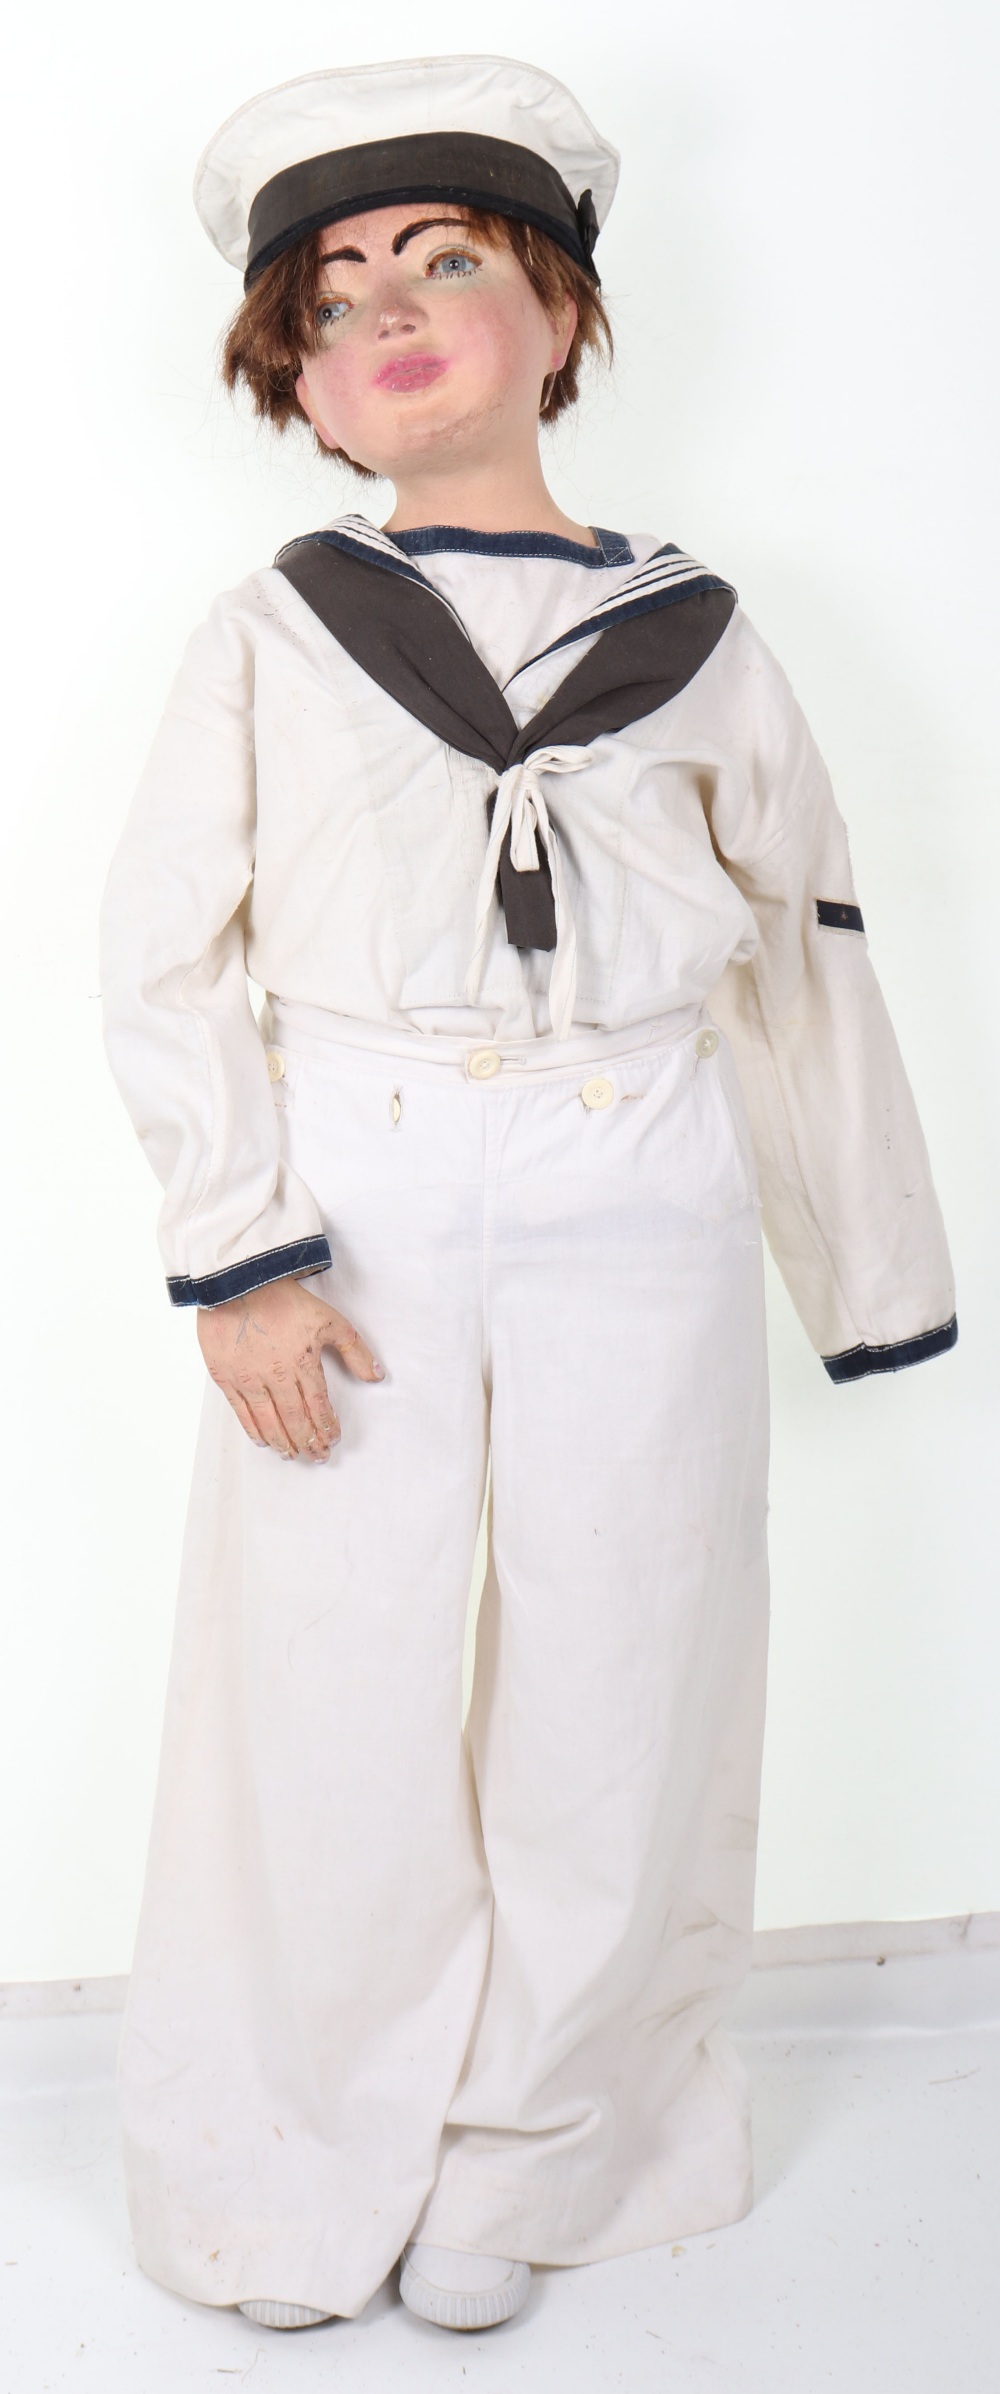 Edwardian / WW1 Period Royal Naval Uniform for a Child